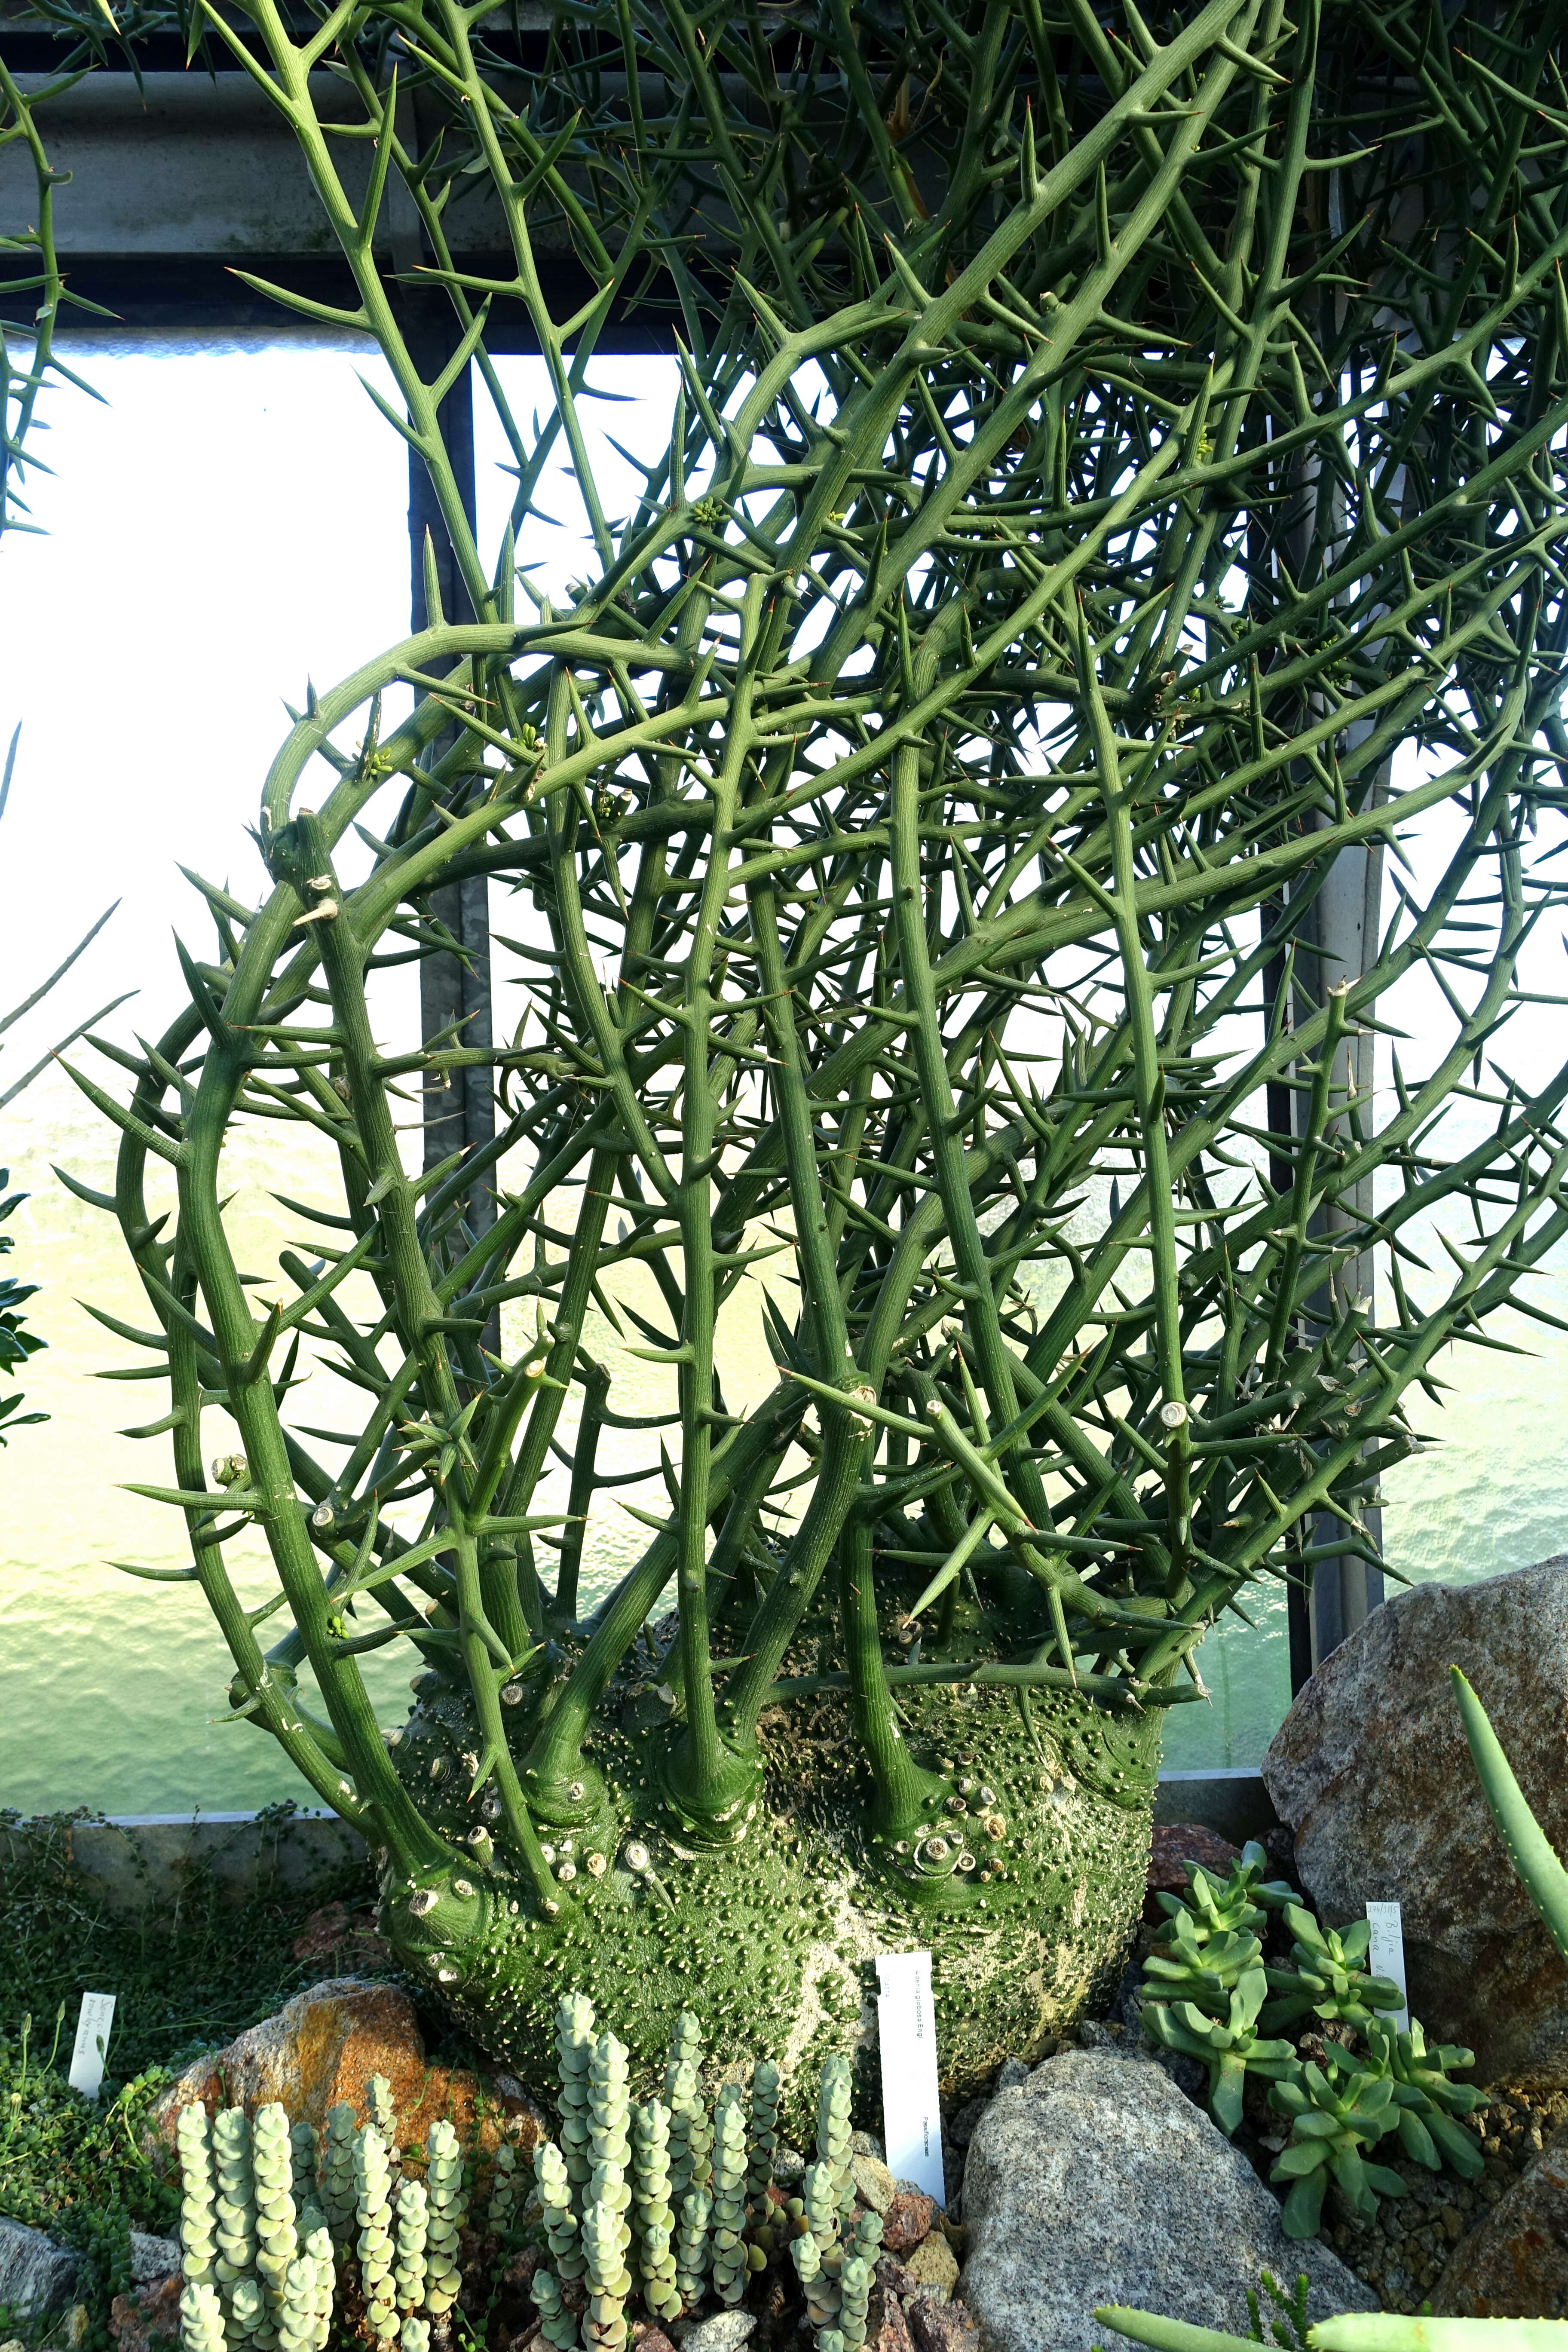 Image of Adenia globosa Engl.